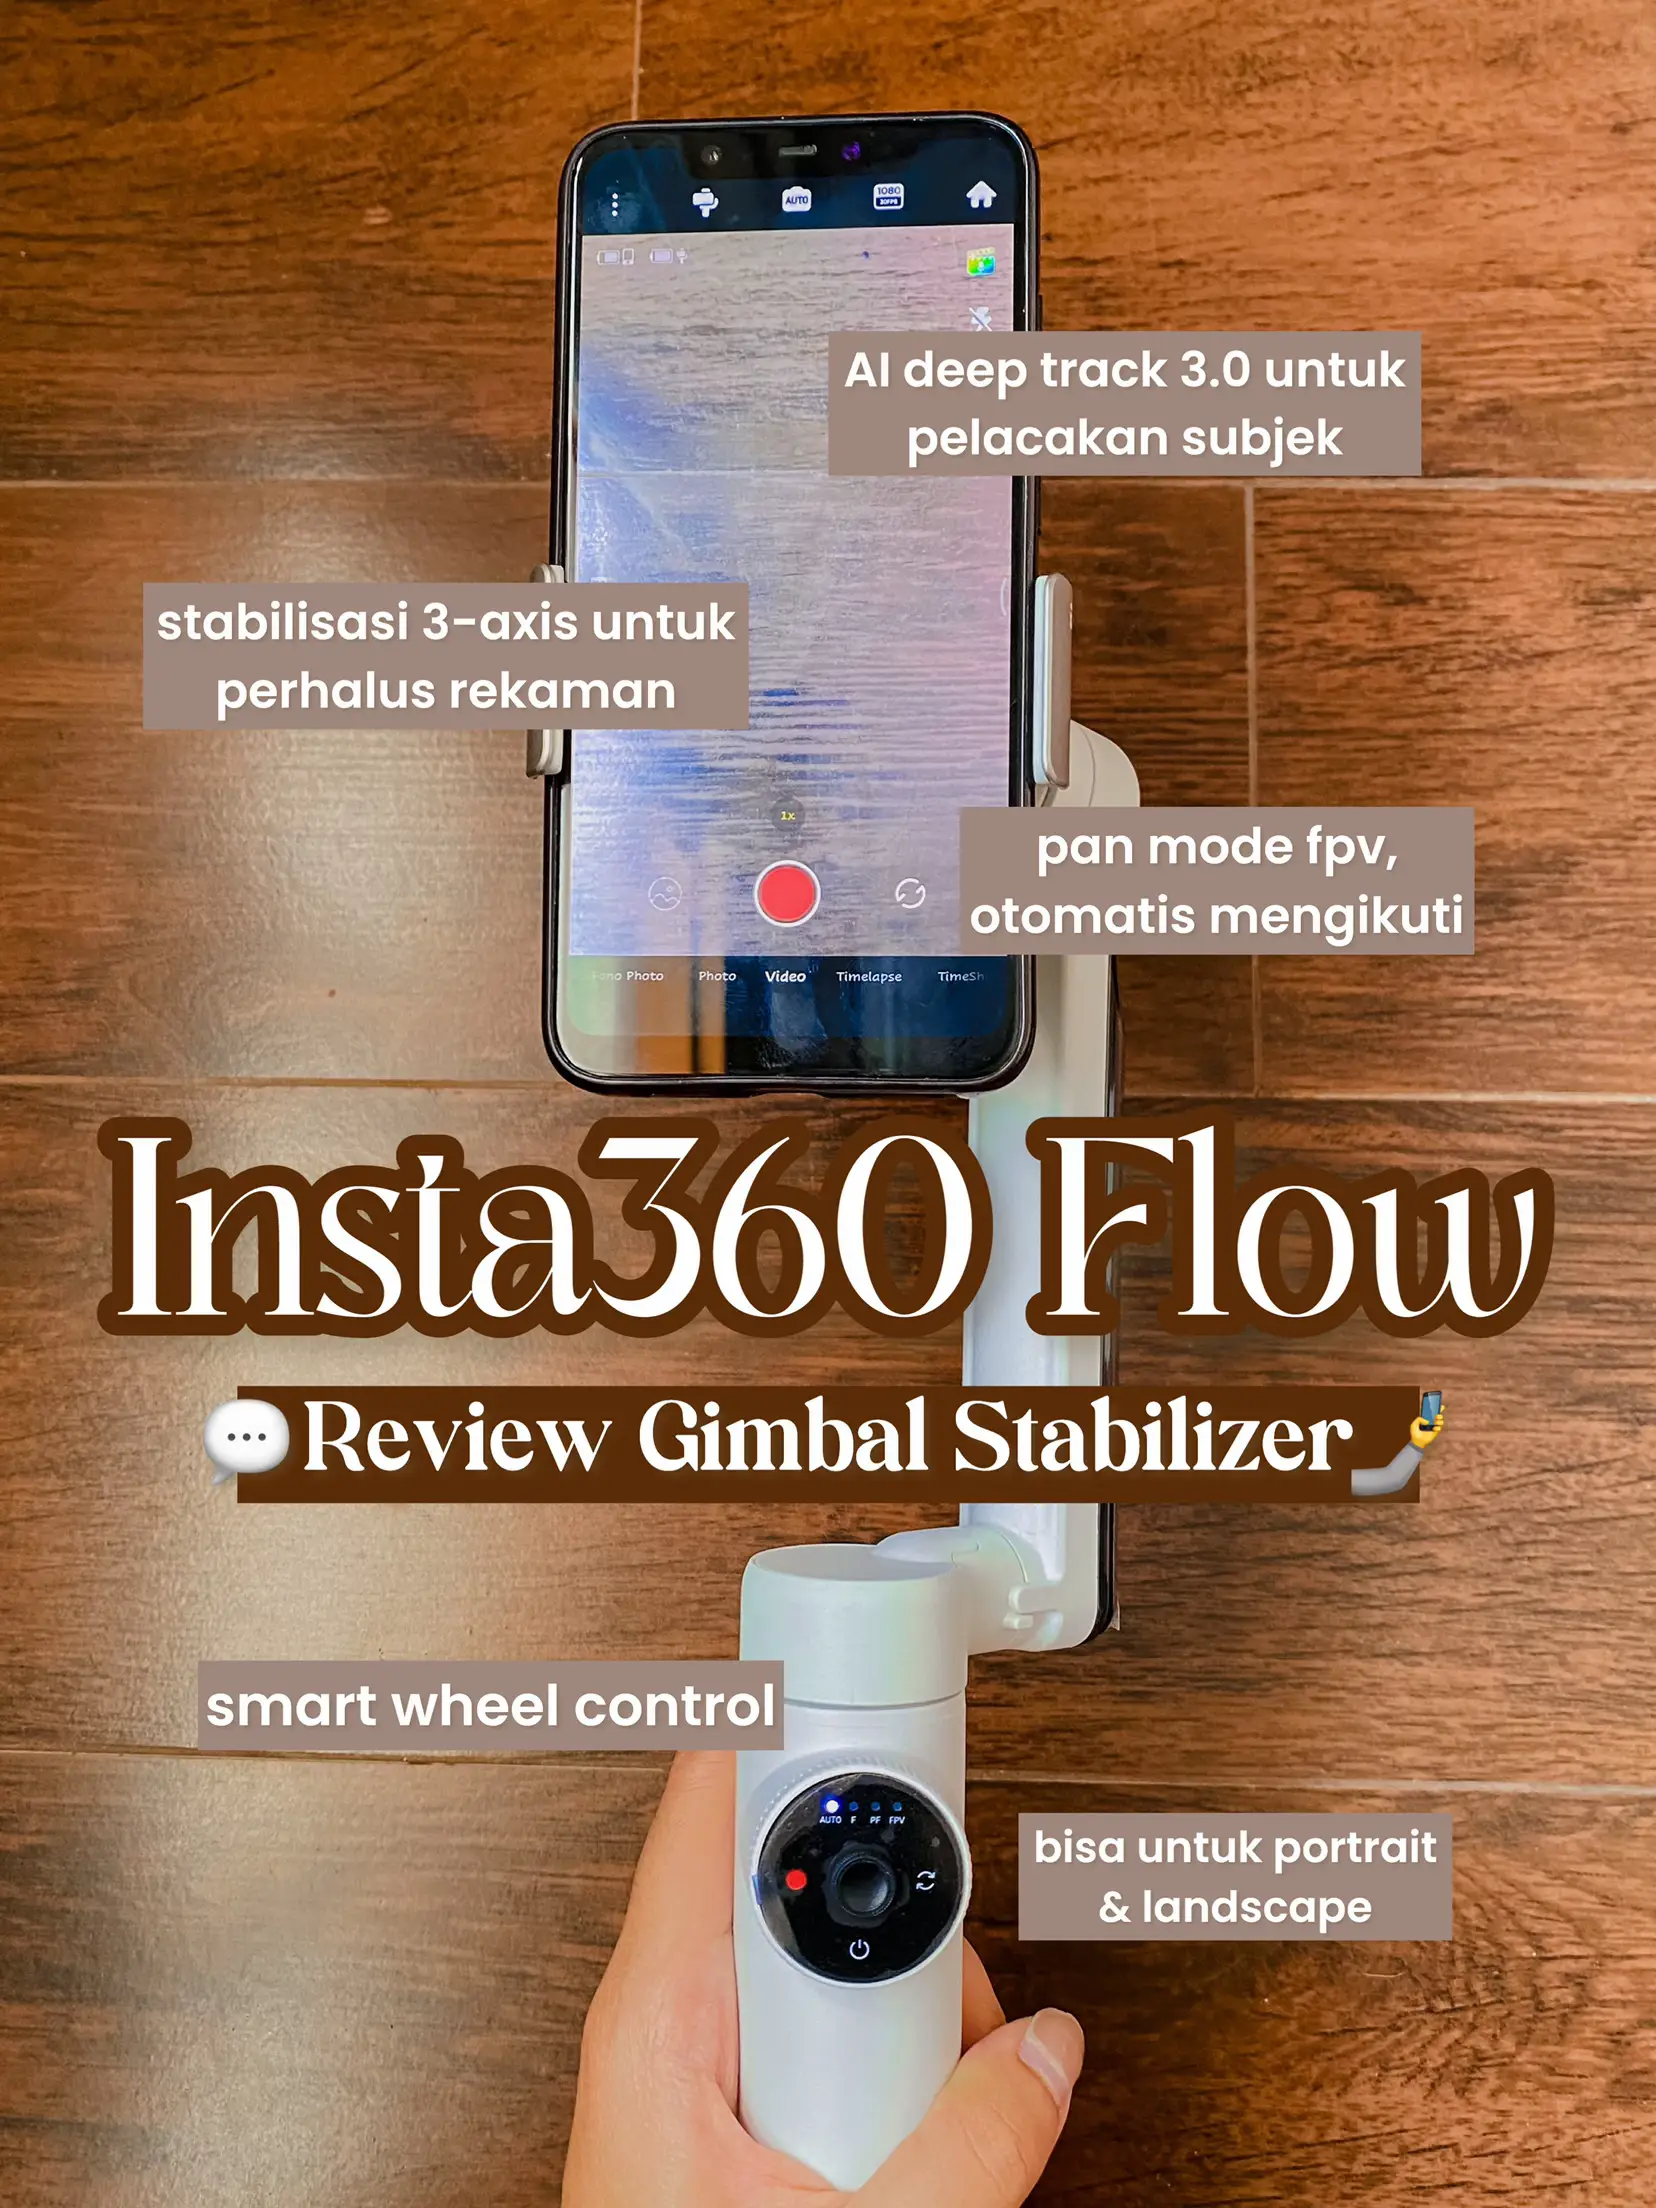 Insta360 Flow Review